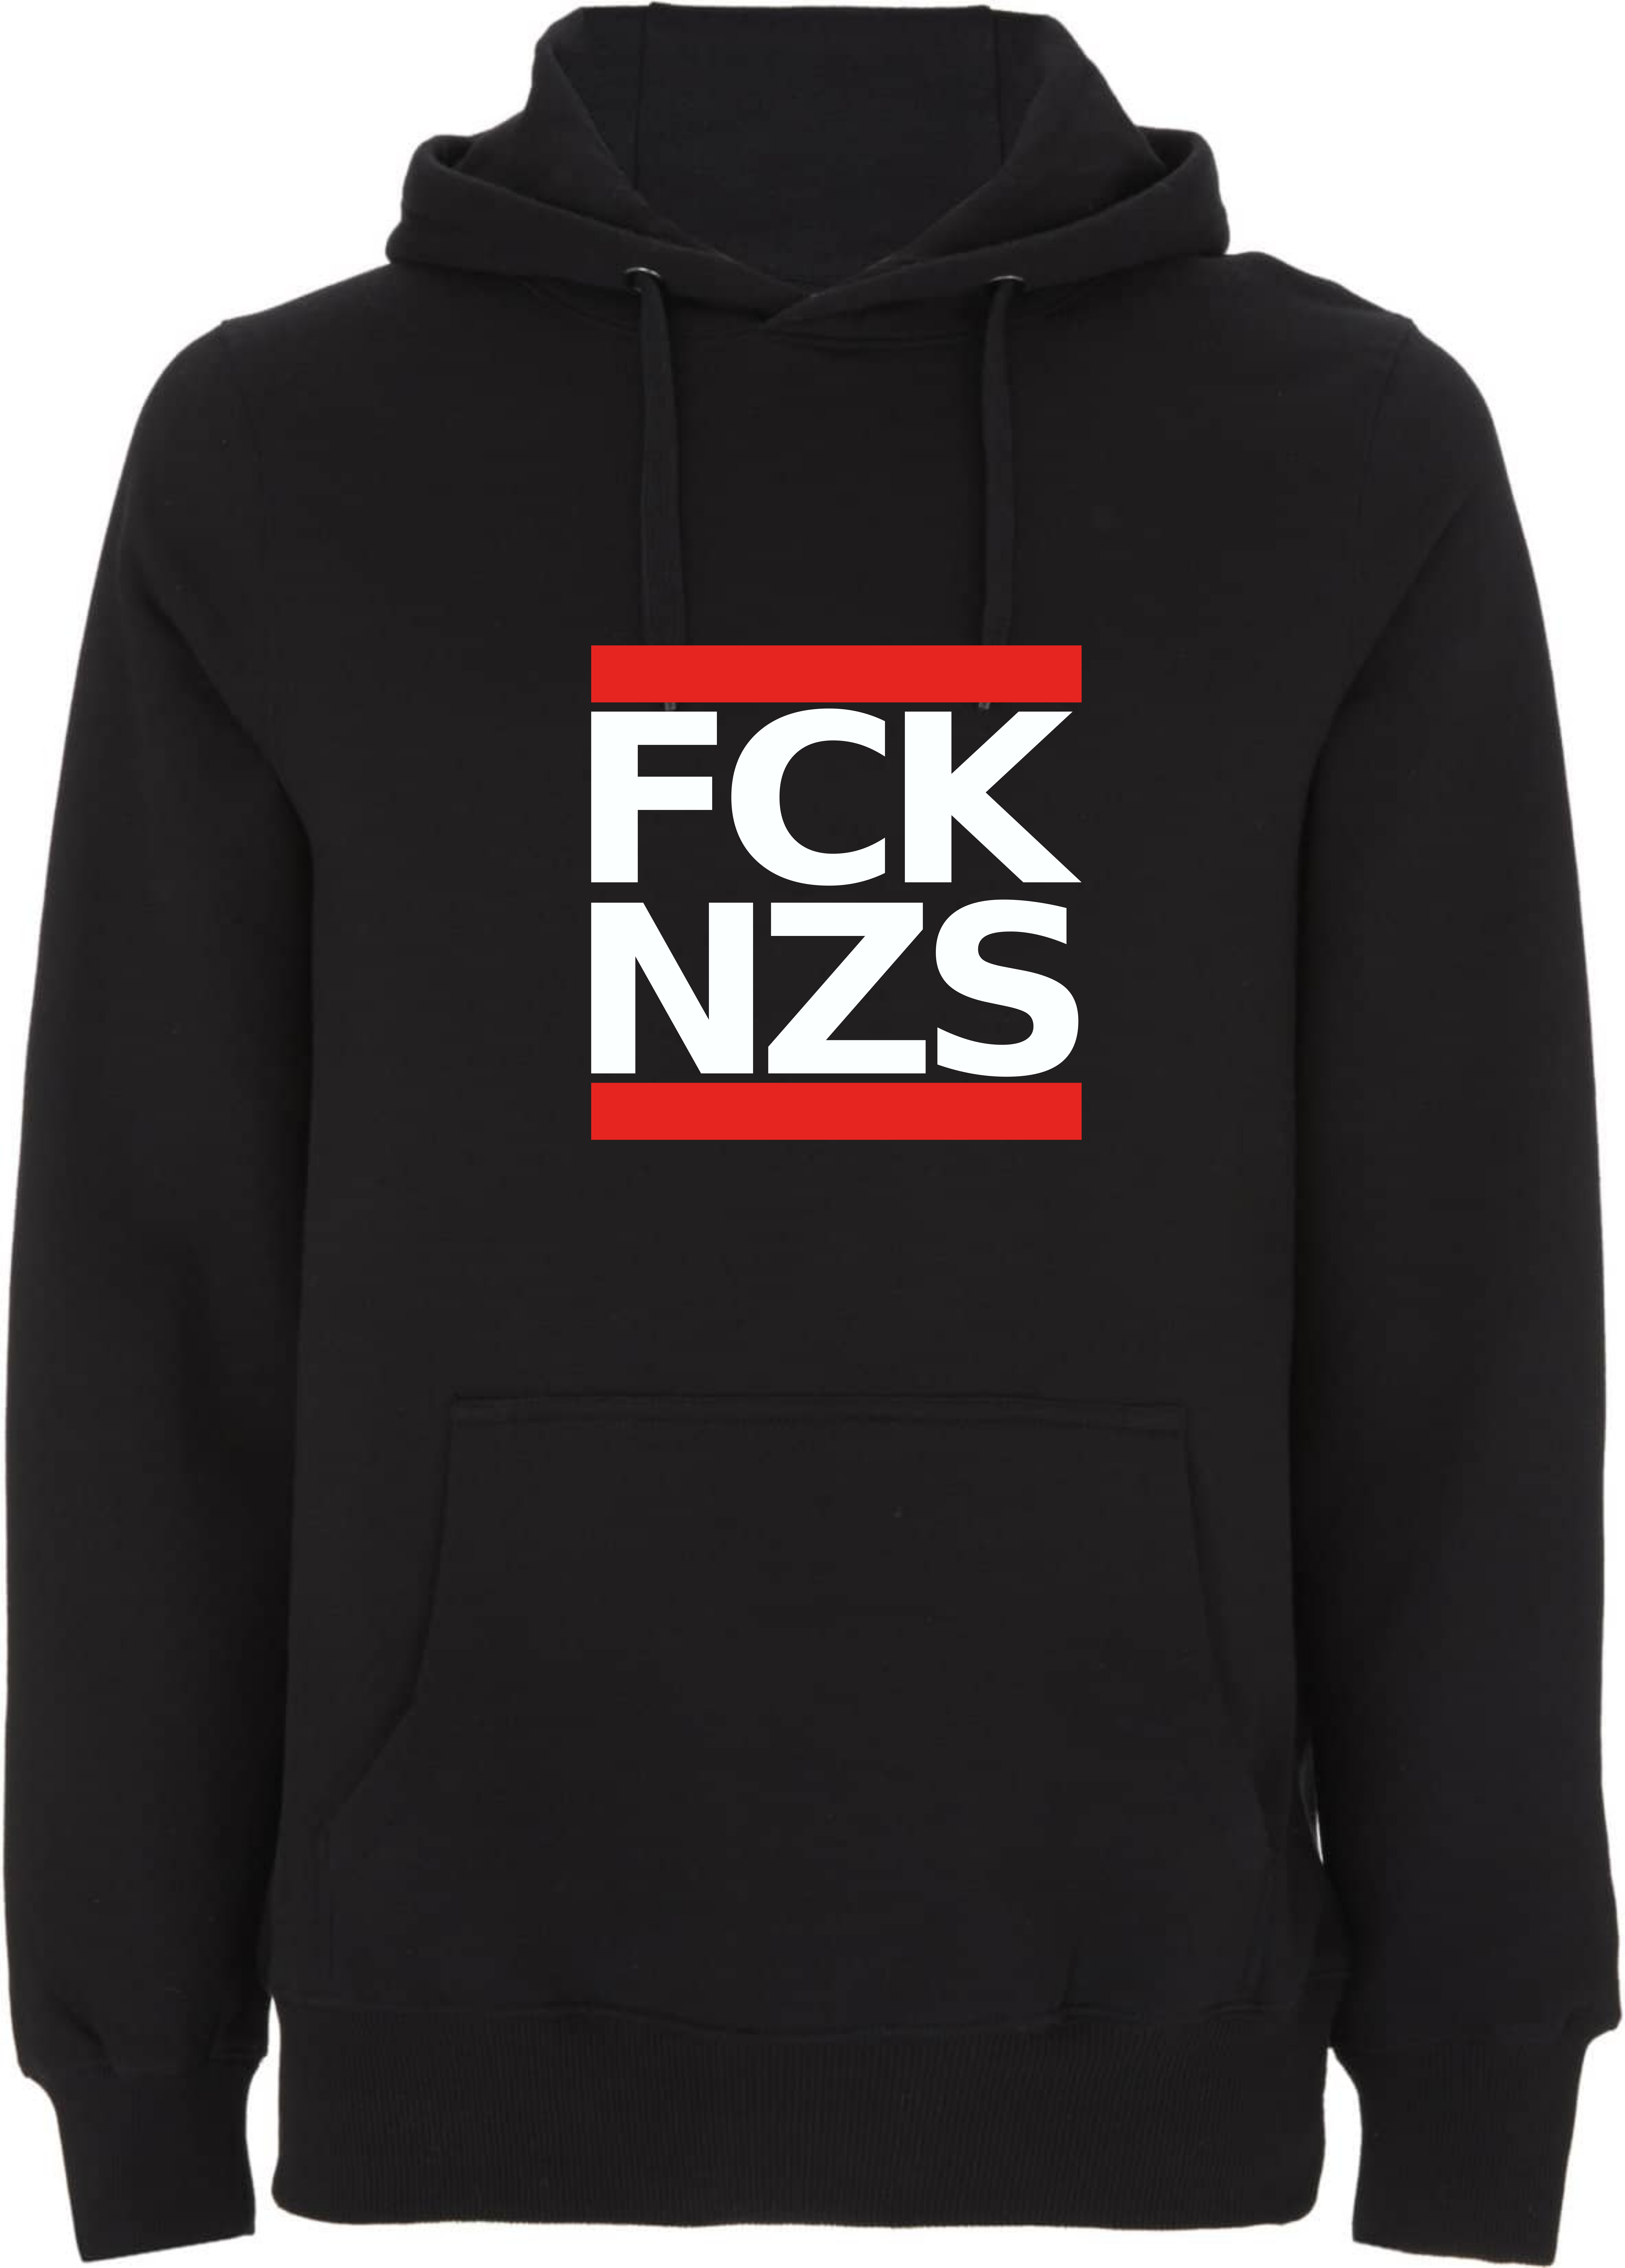 FCK NZS | Unisex Pullover